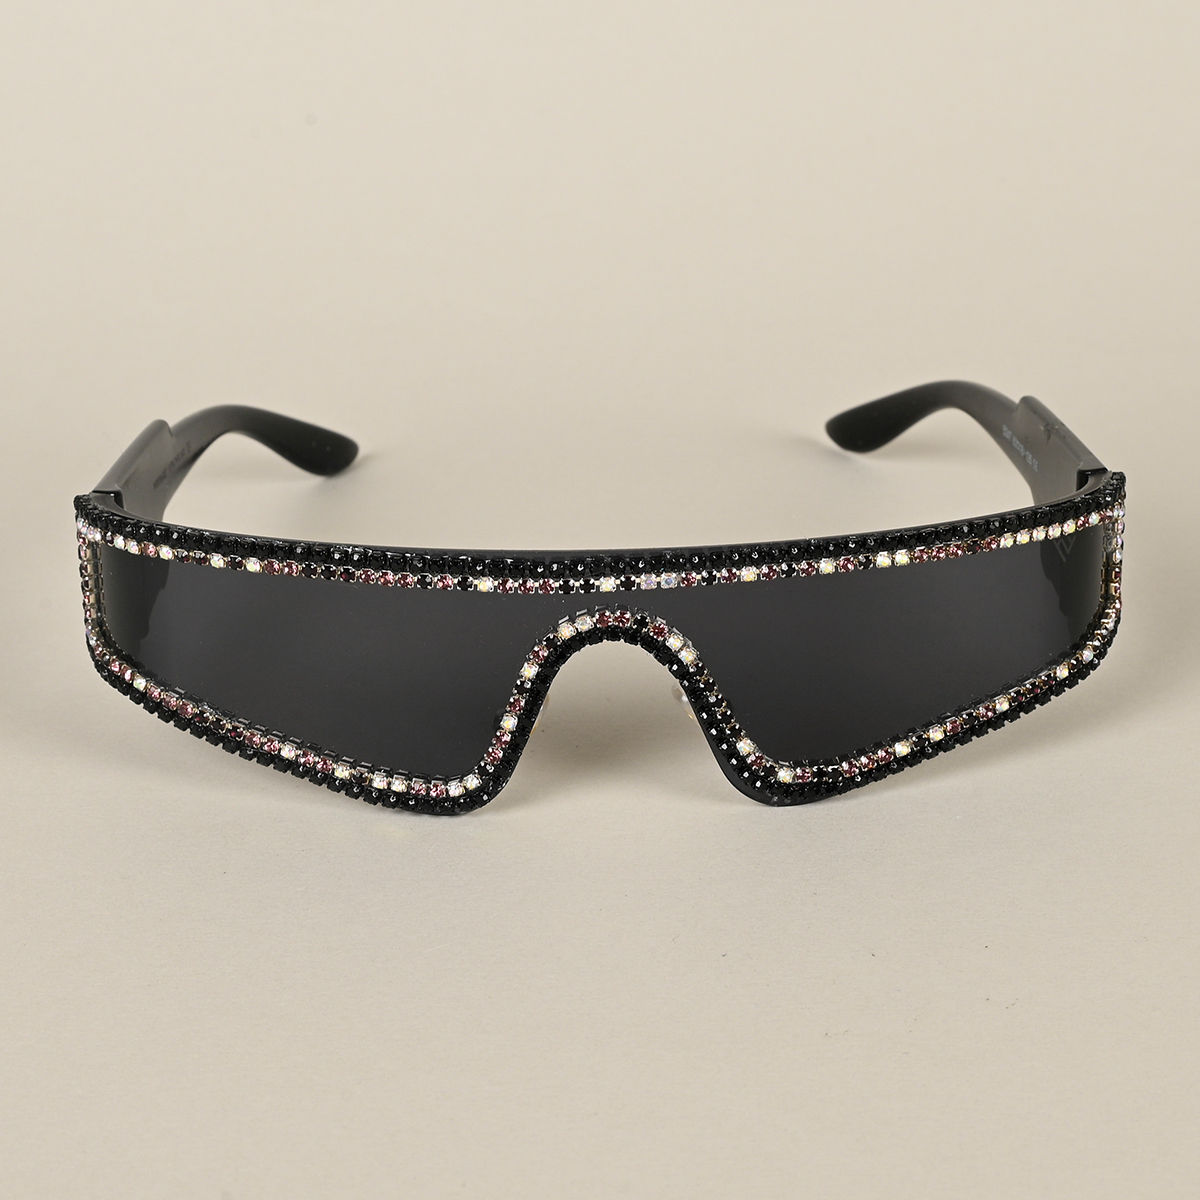 Buy Voyage Black Wrap-Around Sunglasses for Men & Women